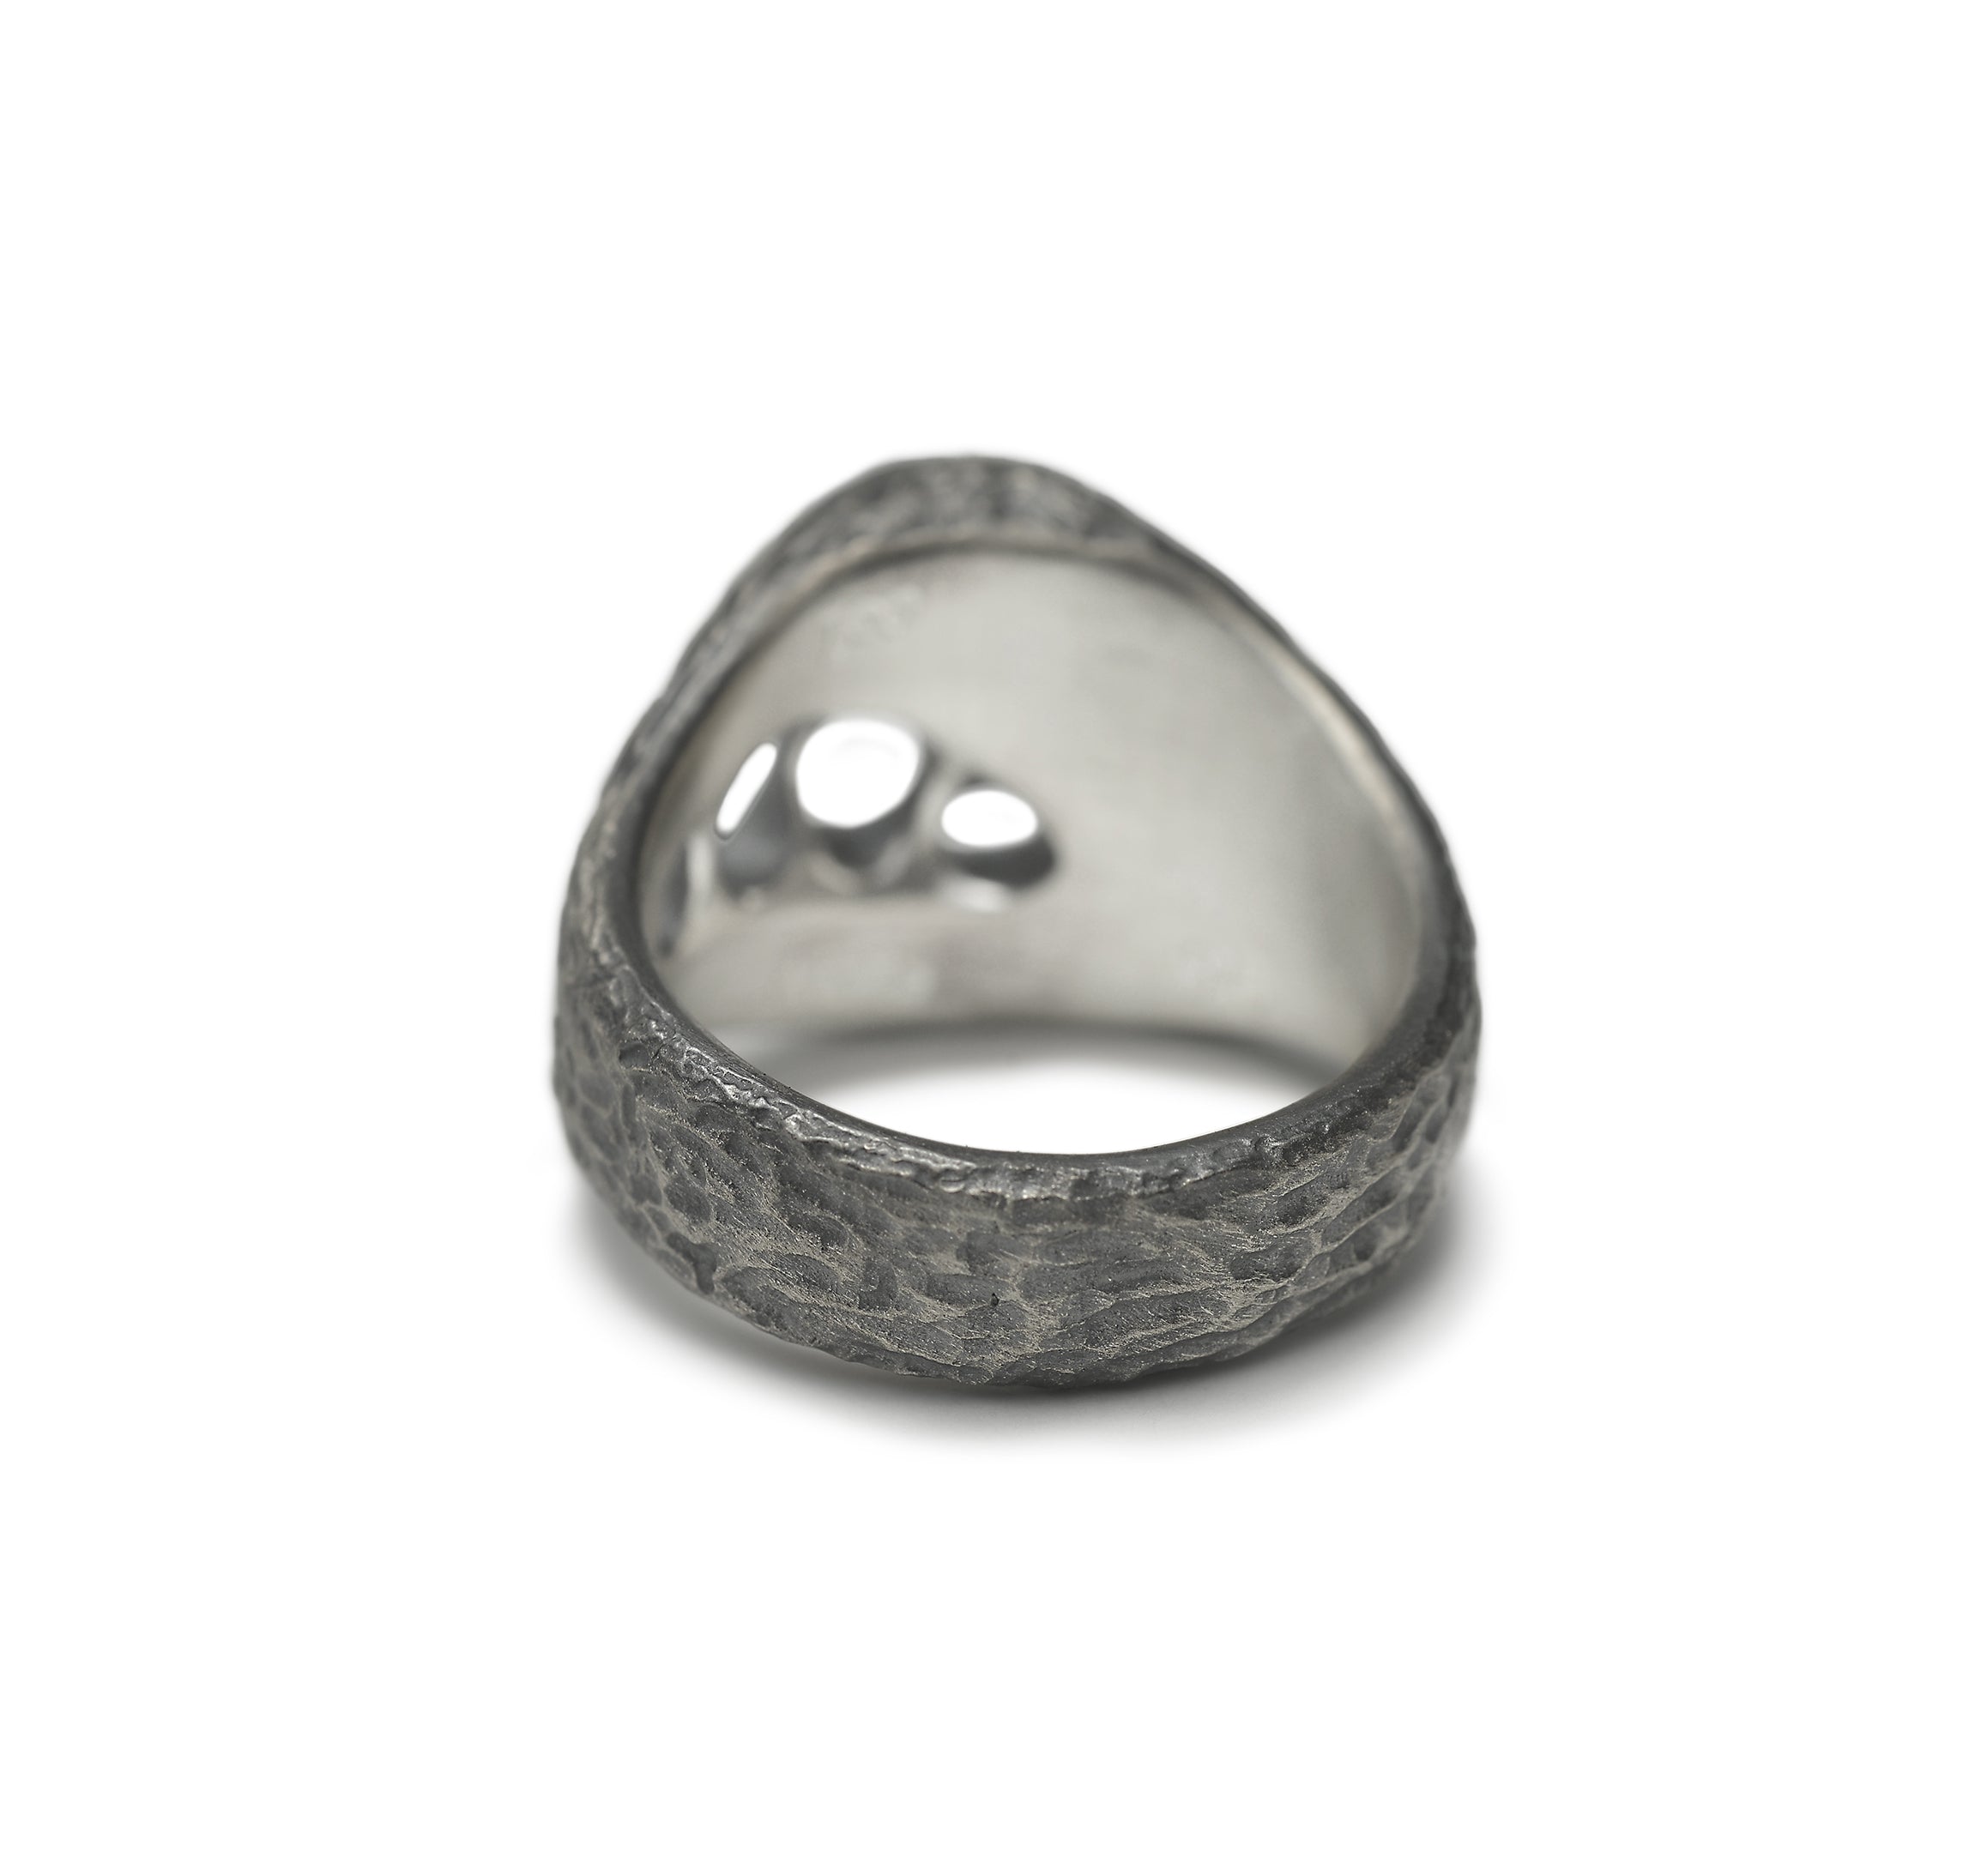 Eternal - oval sterling silver signet ring